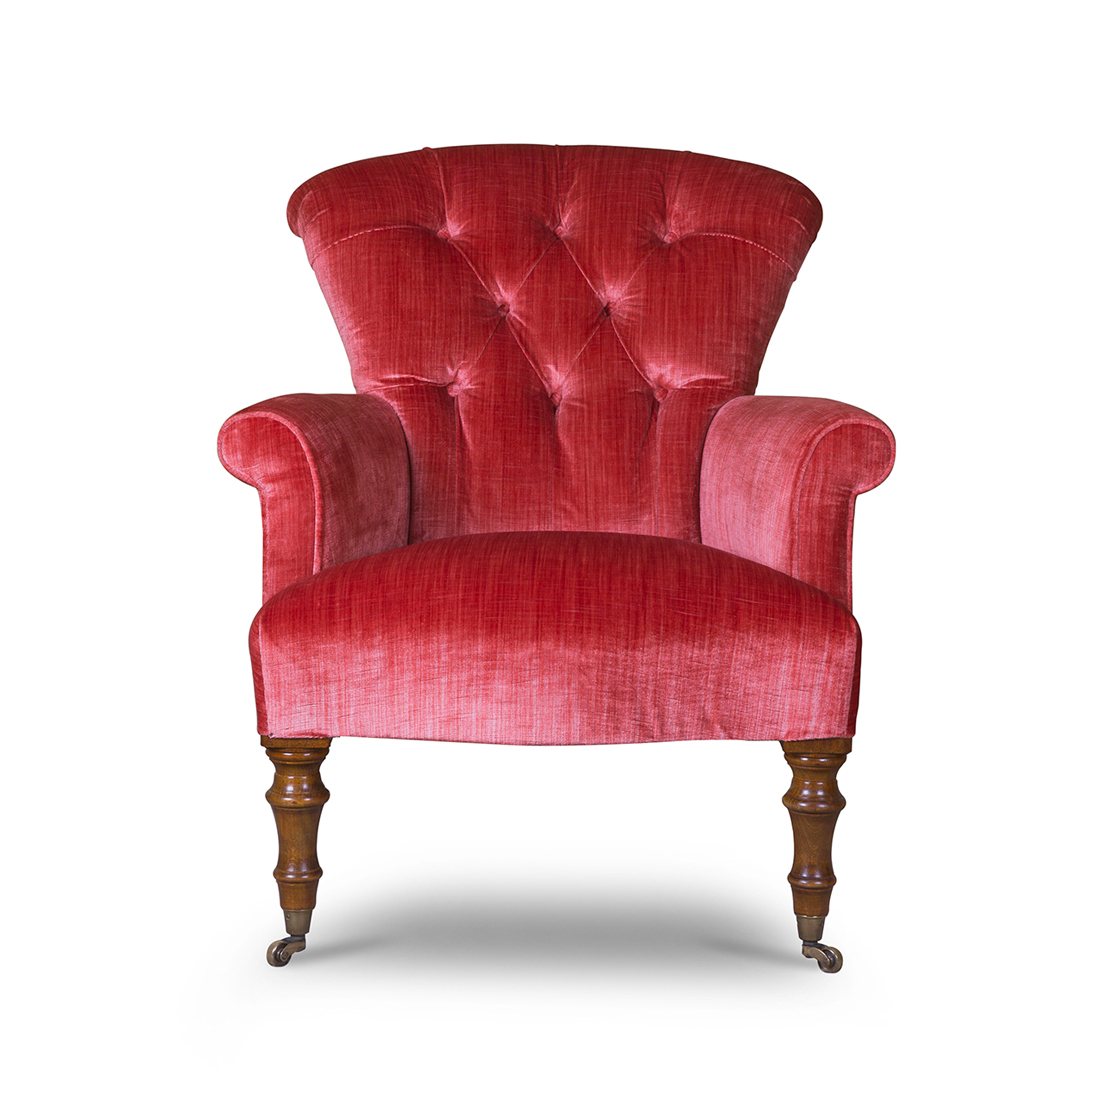 Victorian chair in Como silk velvet - Pompeiian red - Beaumont & Fletcher